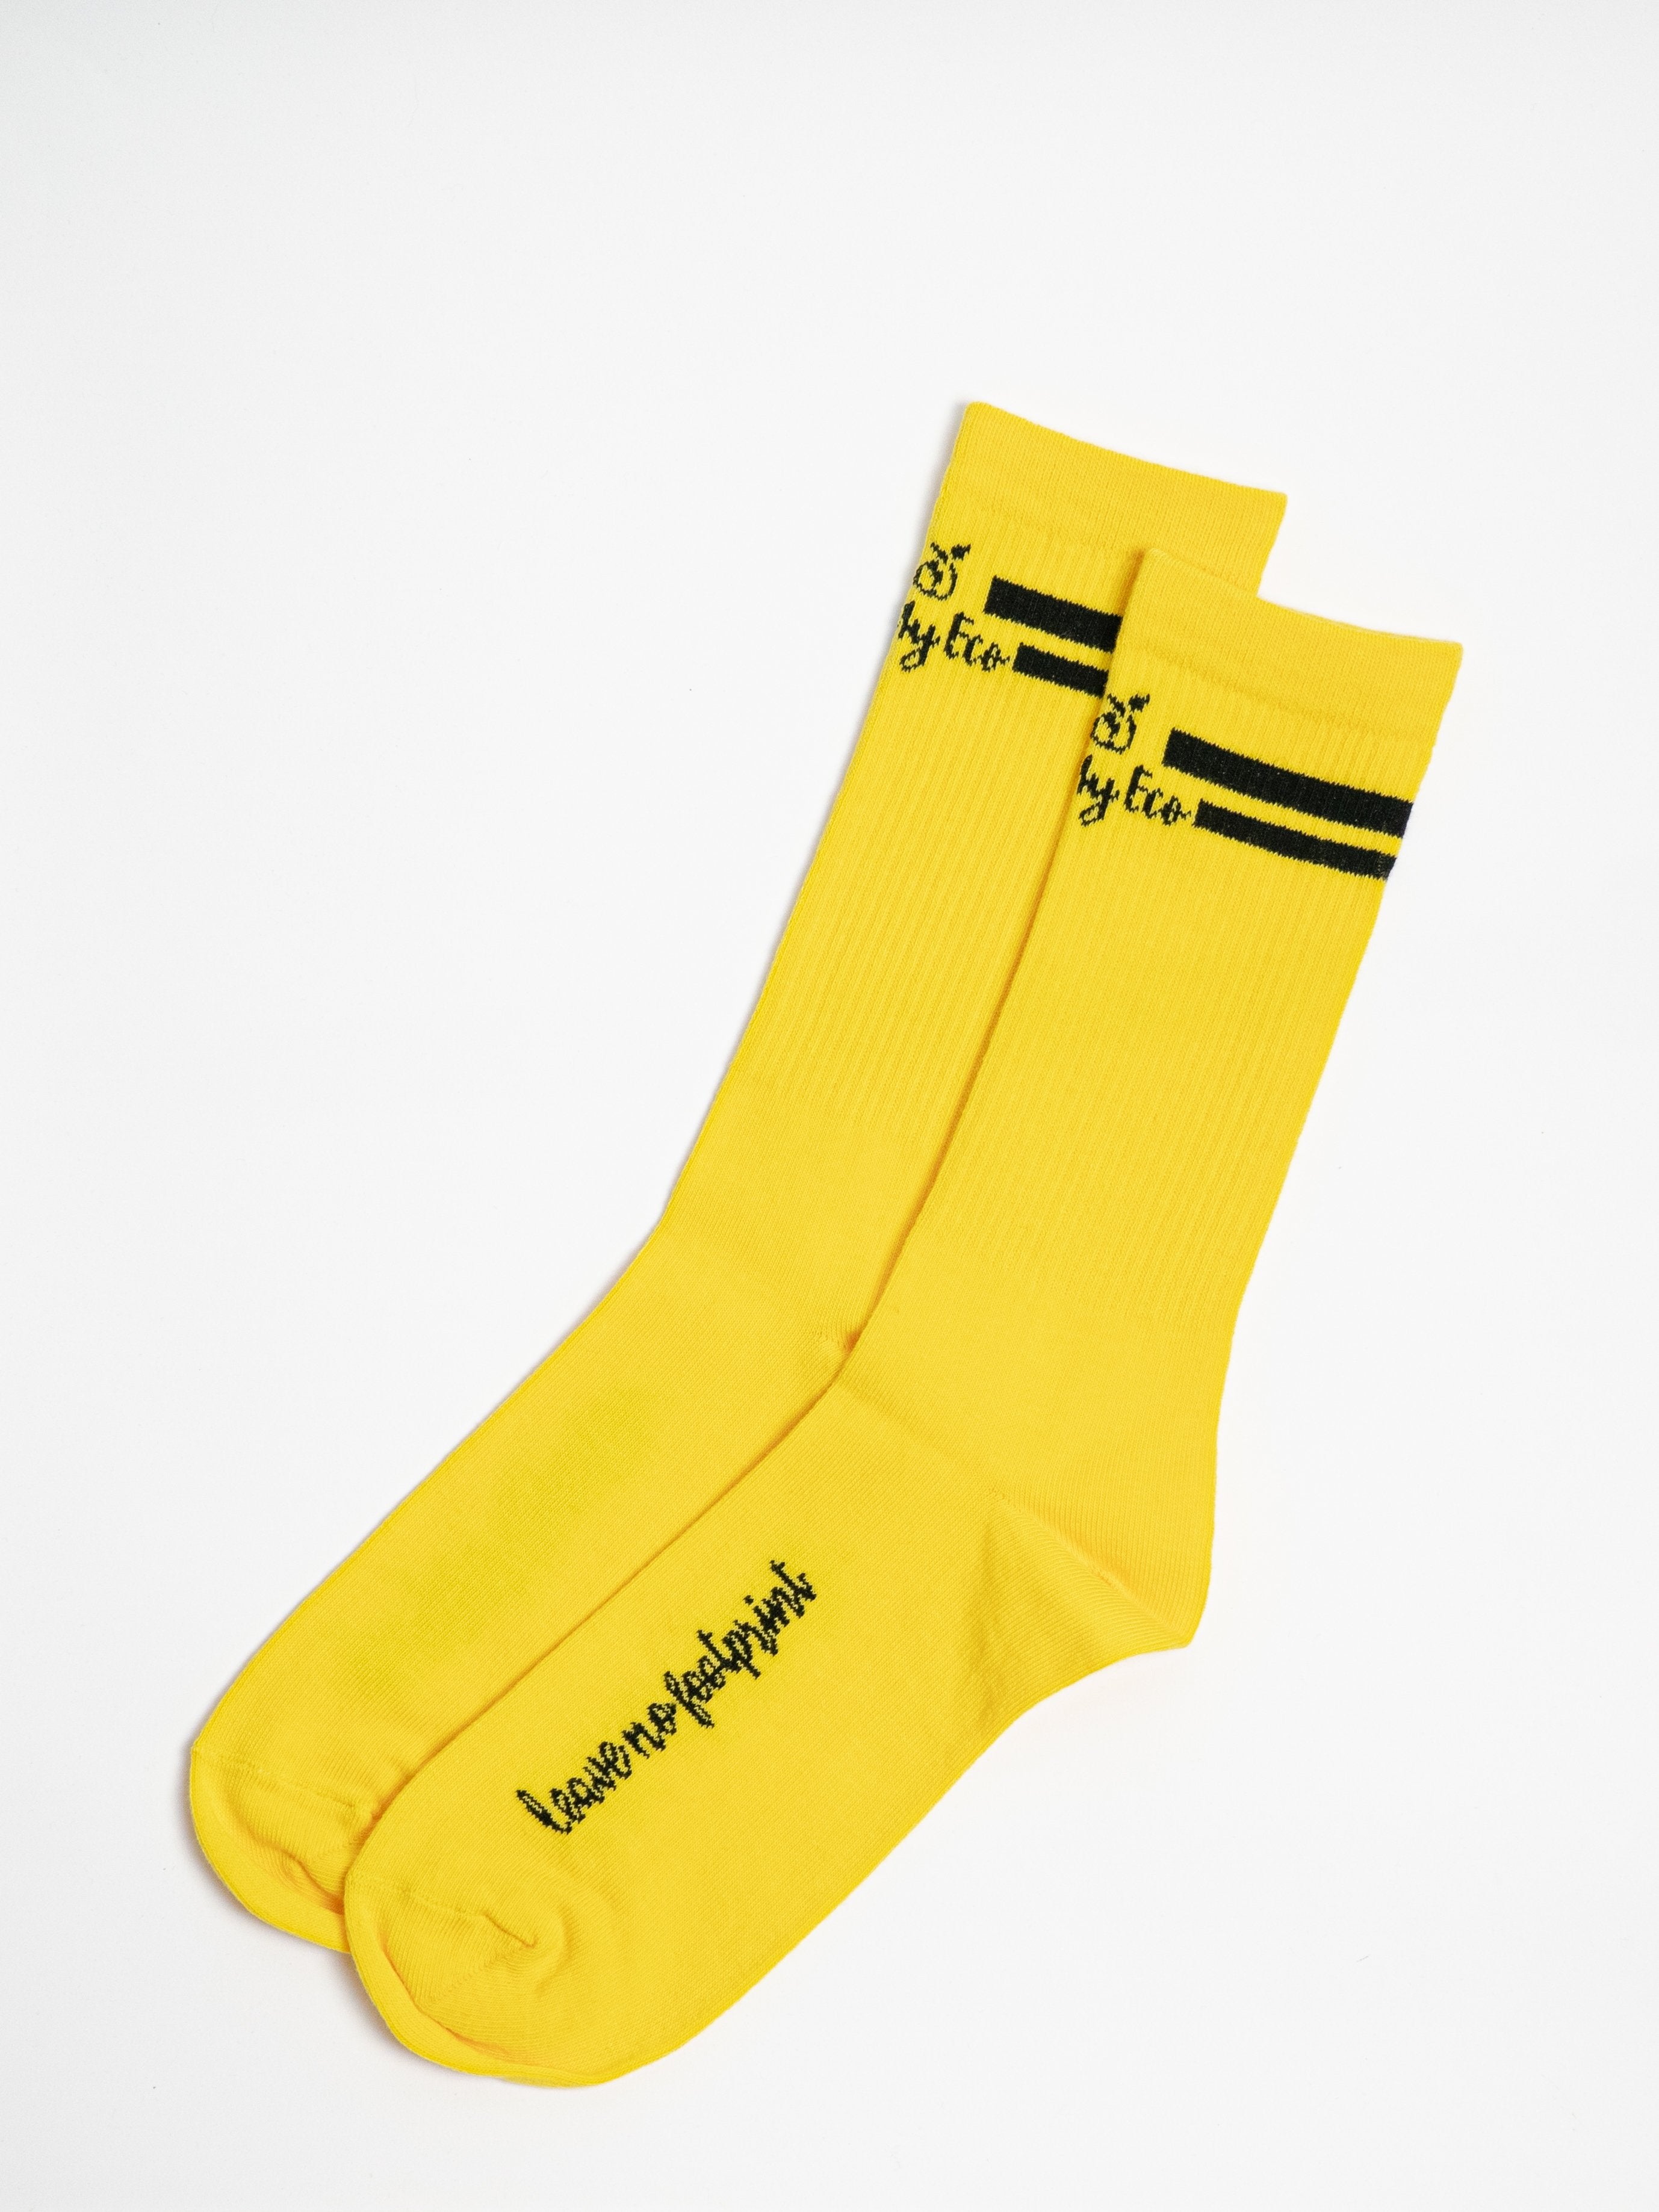 2-Sock pack: Yellow & Purple